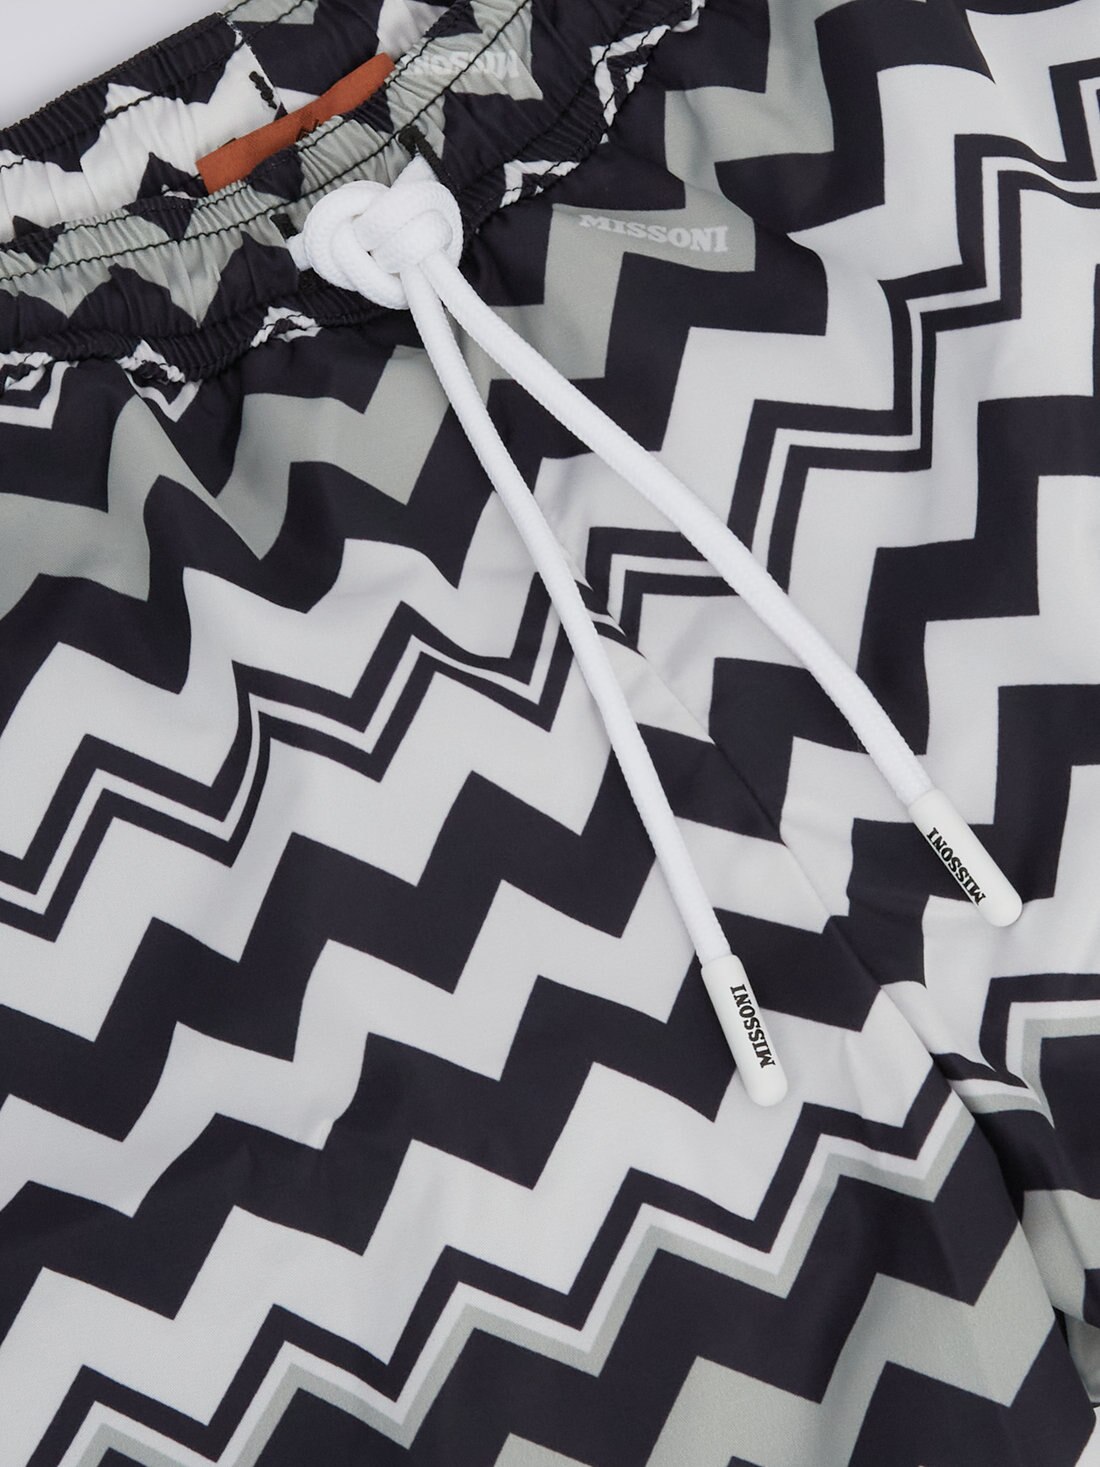 Two-tone swimming costume with zigzag pattern, Black & White - KS23WP01BV00E3SM92O - 2